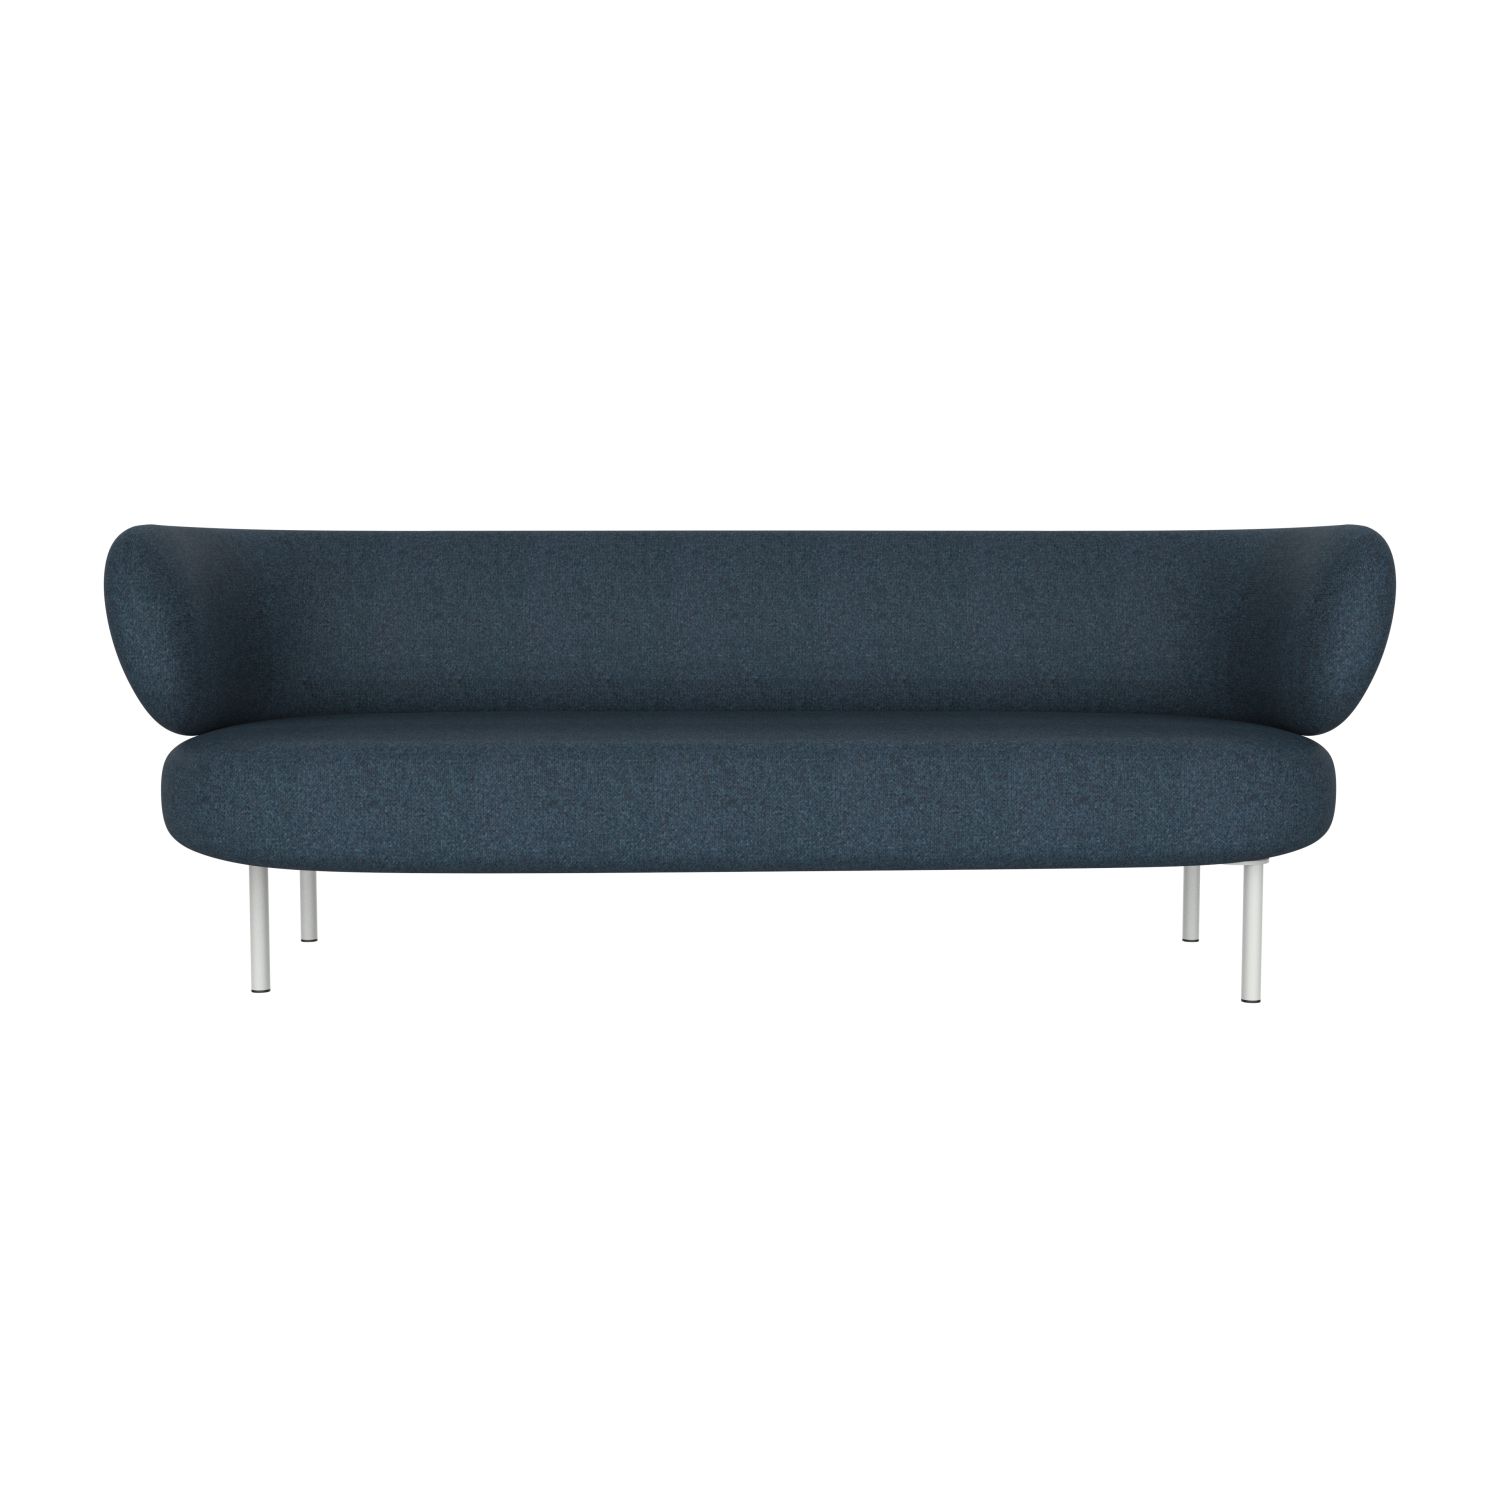 lensvelt studio stefan scholten sofa 3seater 215x84cm middle lounge part moss night blue 45 frame light grey ral7035